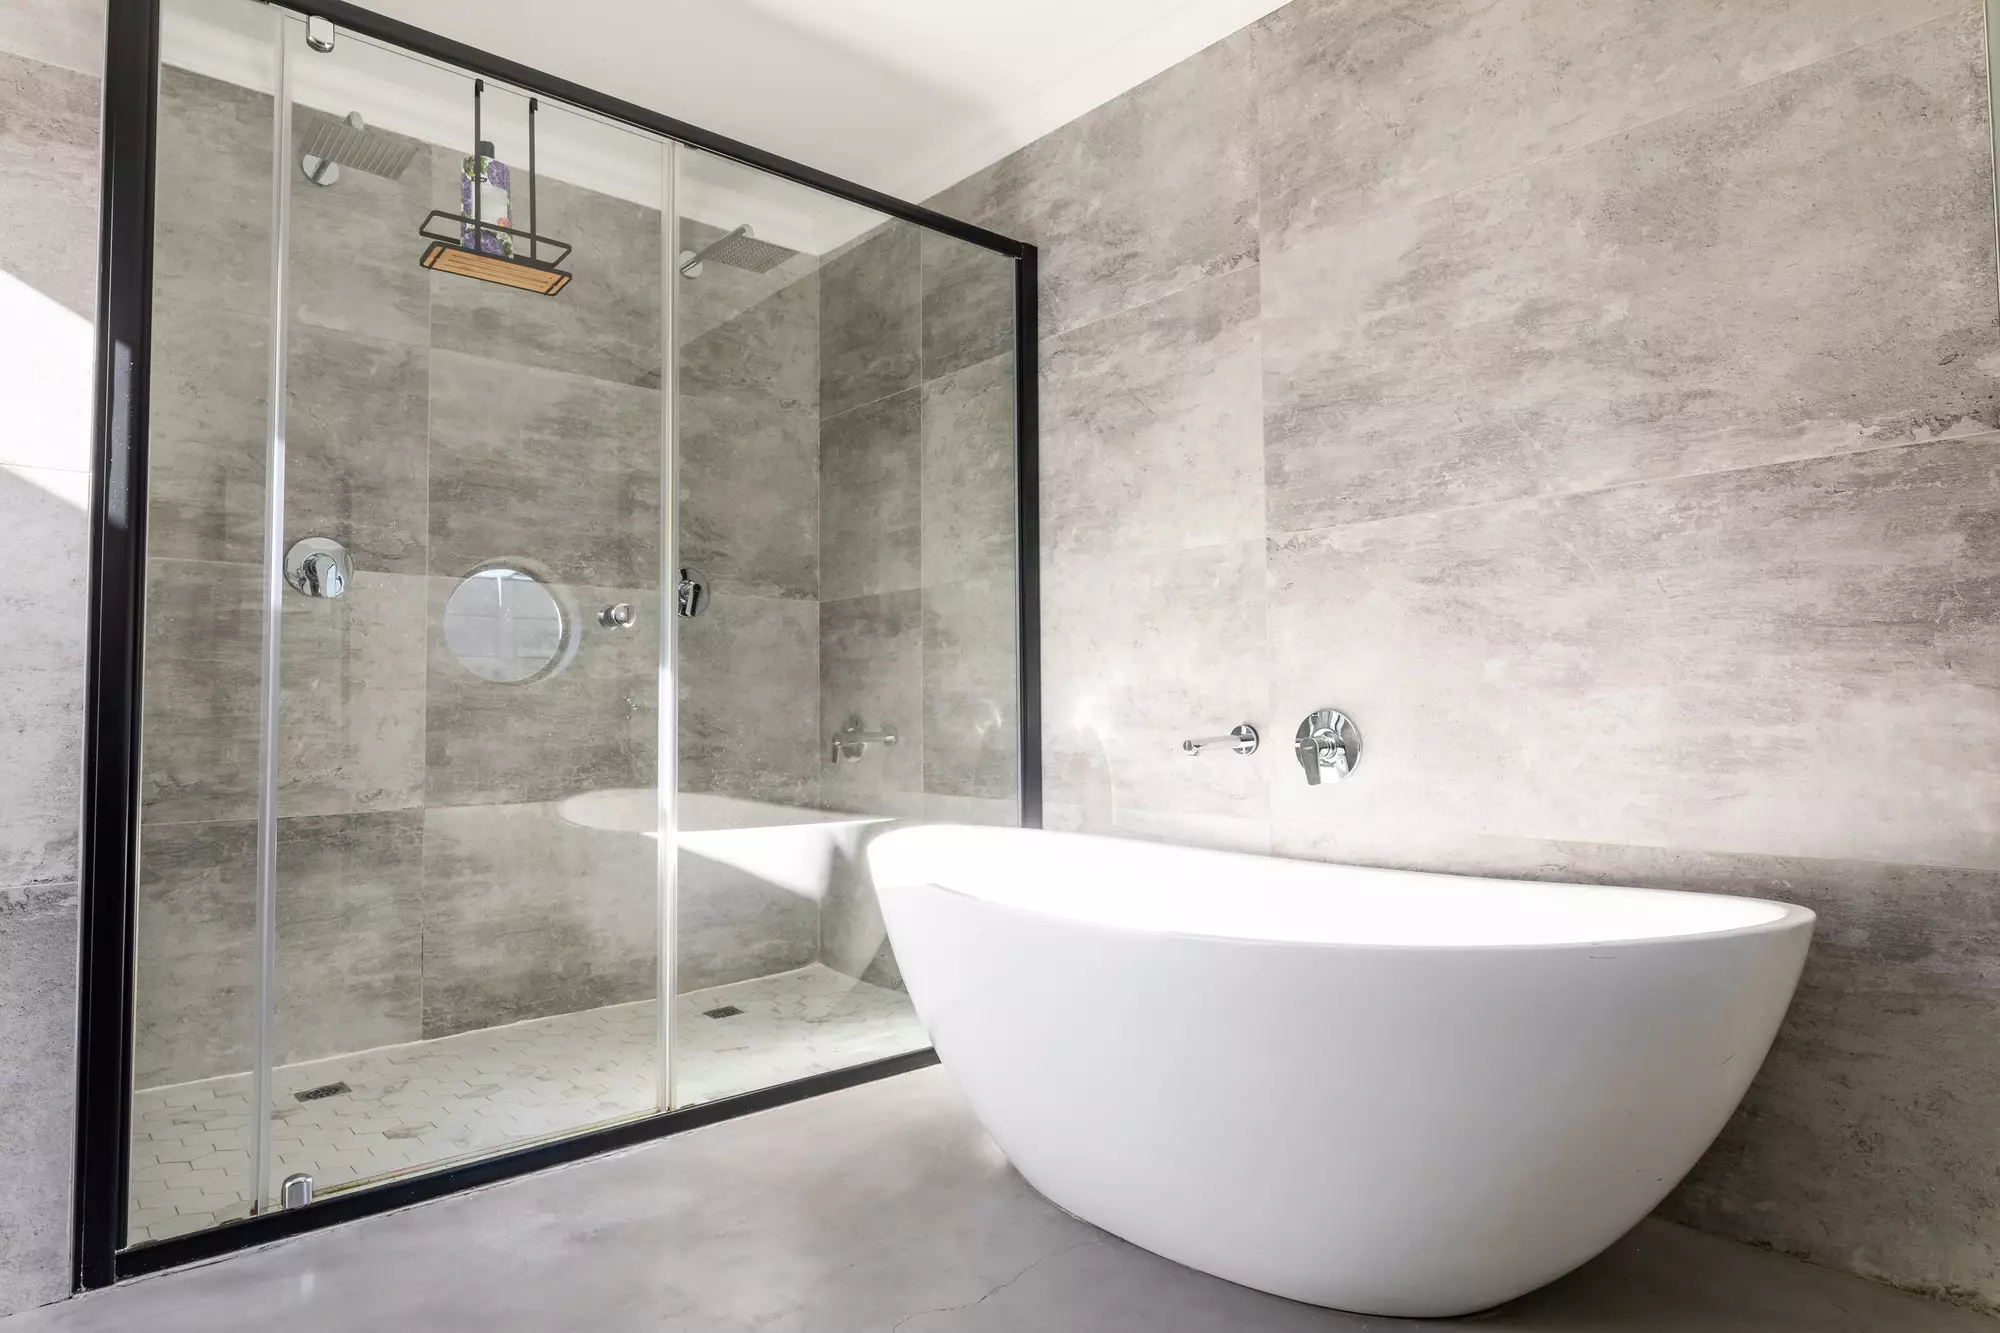 https://www.futuristarchitecture.com/wp-content/uploads/2022/03/empty-bathtub-by-modern-shower-in-bathroom-at-home.jpg.webp